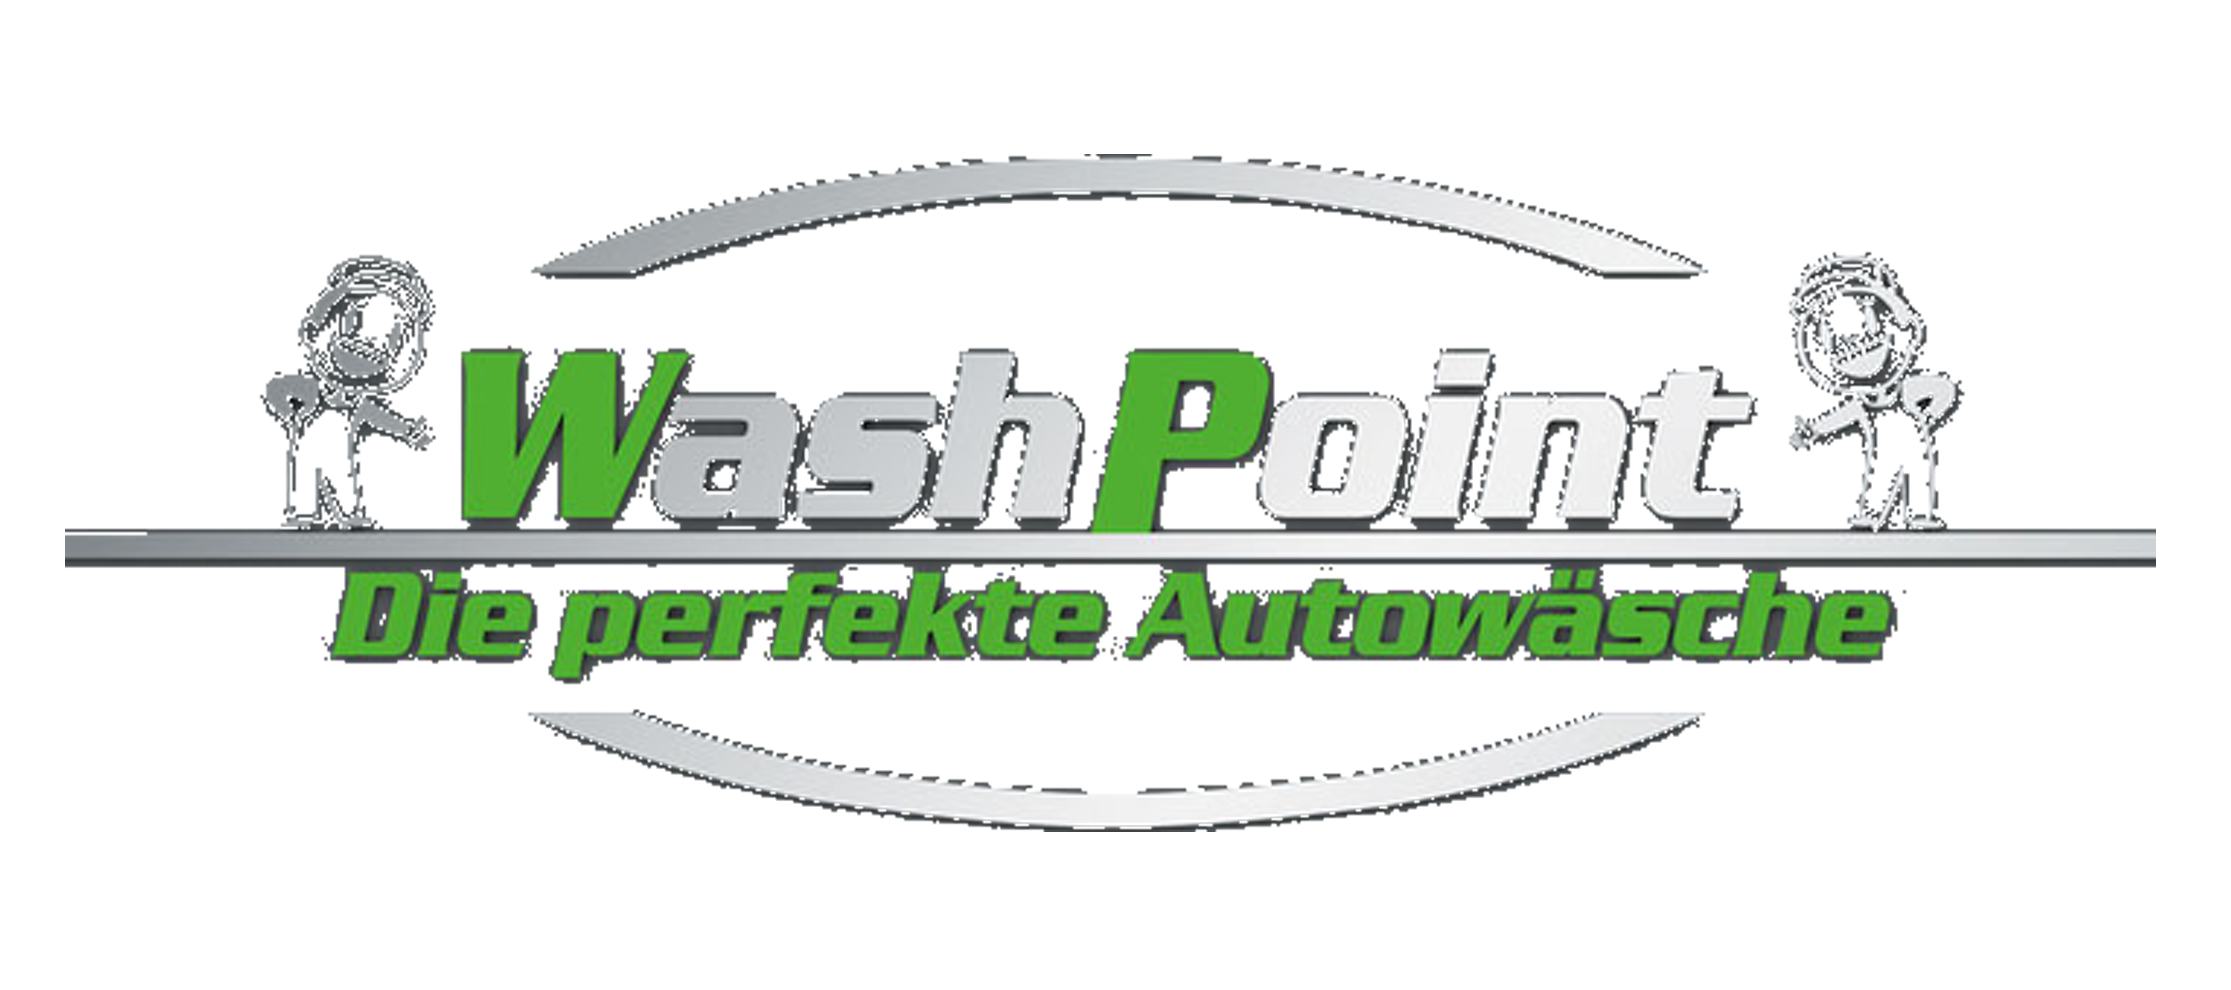 Wash-Point Logo